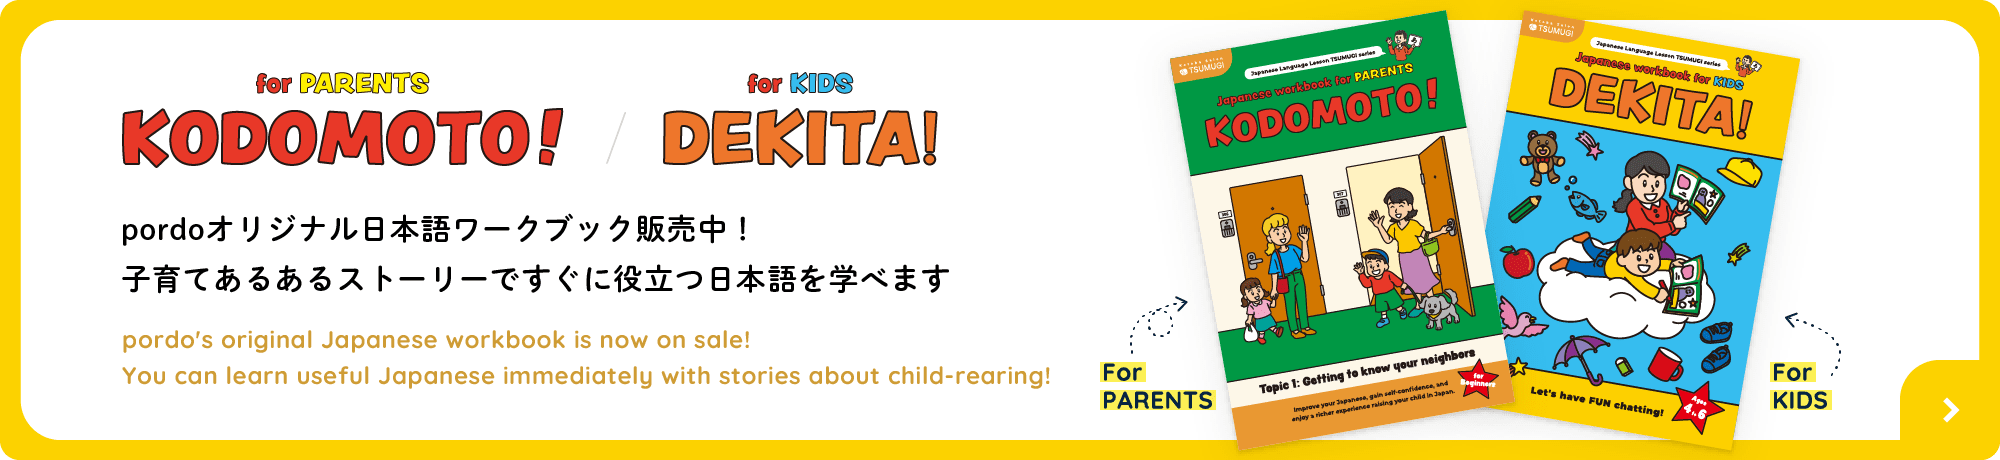 pordoオリジナル日本語ワークブック販売中！子育てあるあるストーリーですぐに役立つ日本語を学べます